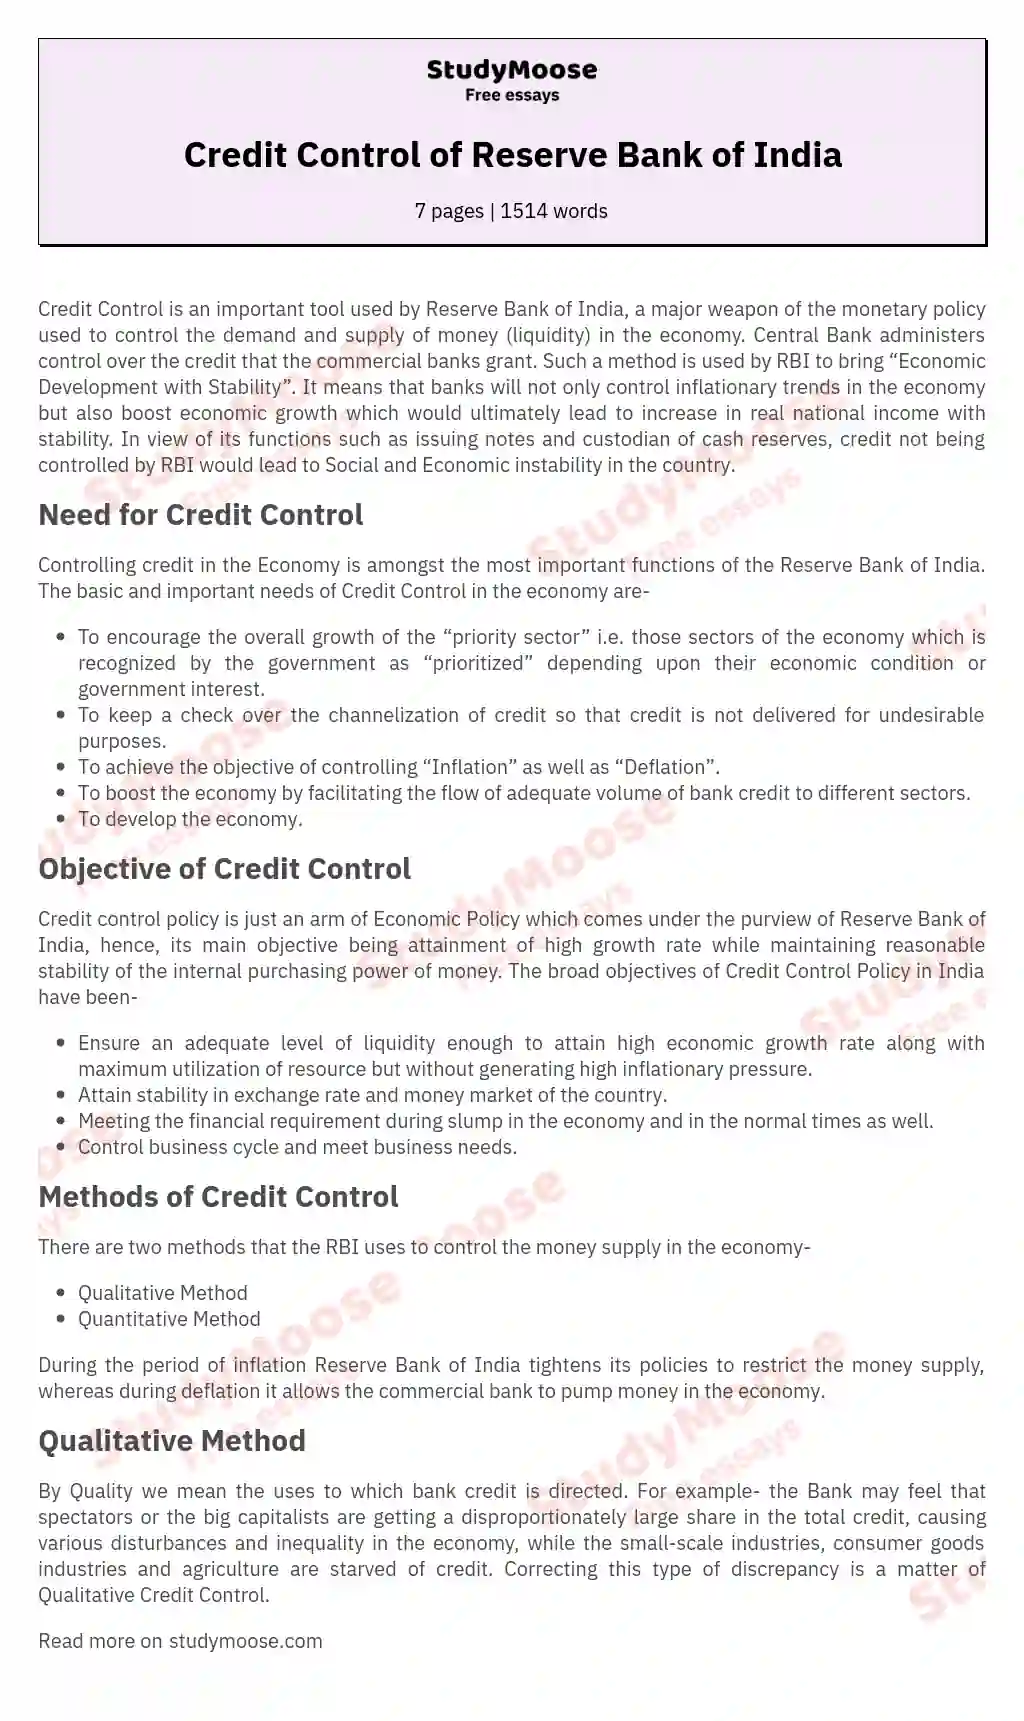 Credit Control of Reserve Bank of India essay